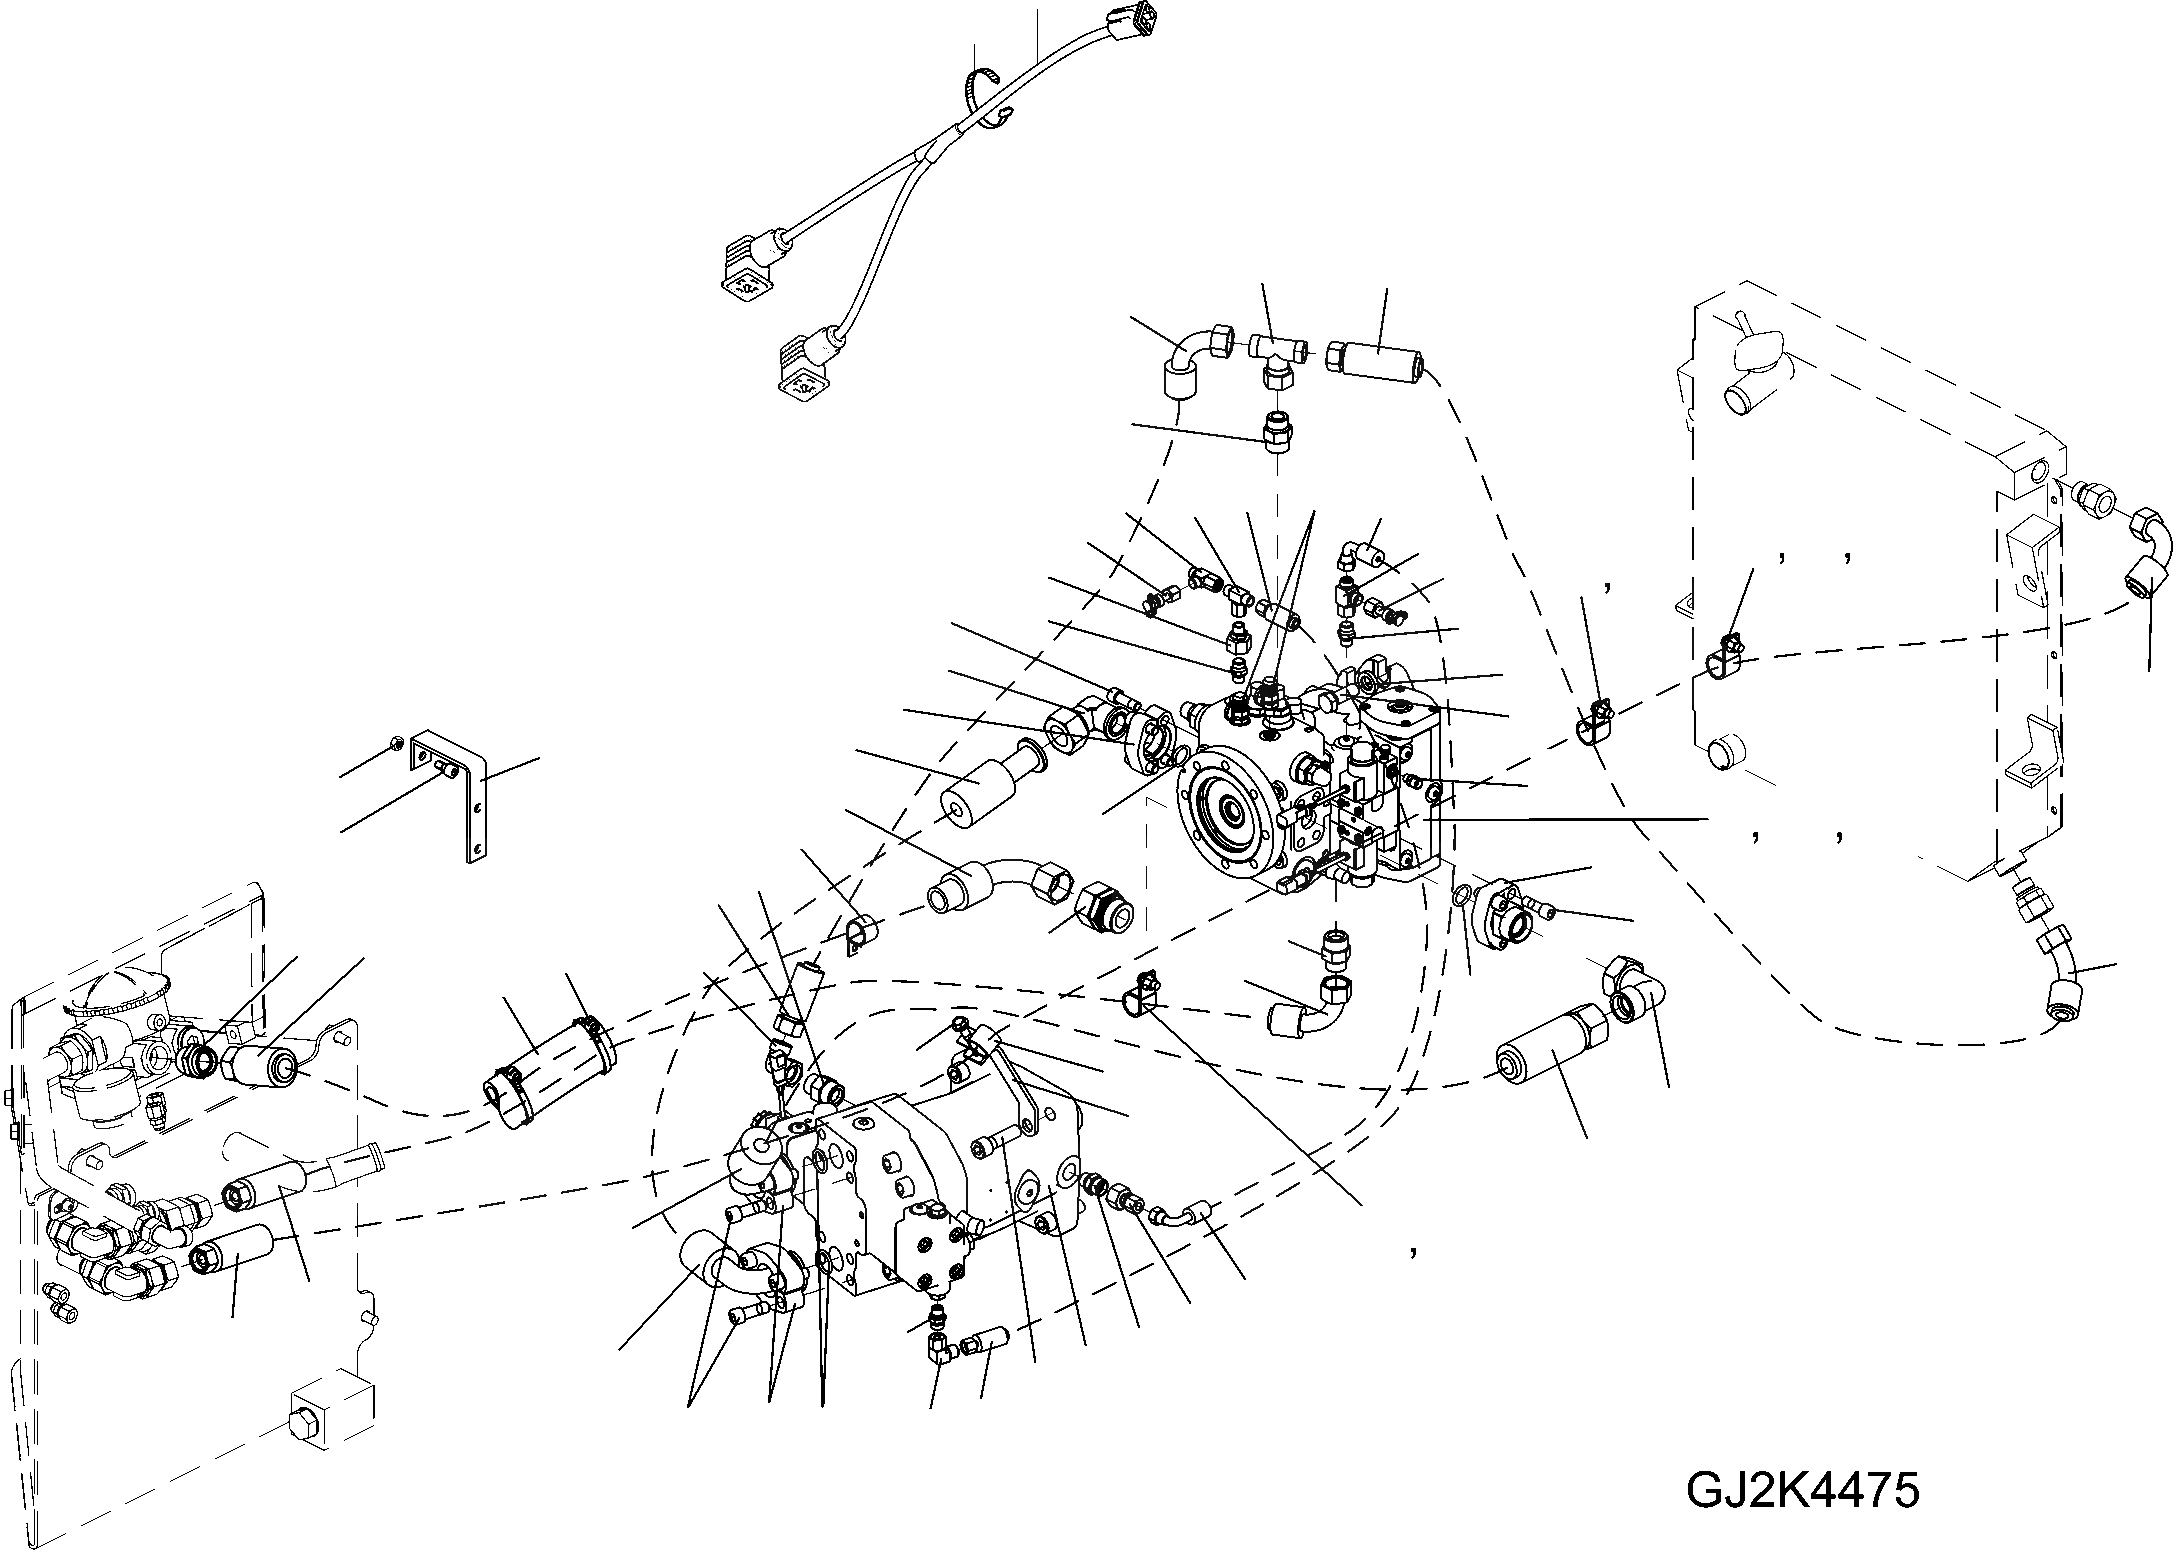 Схема запчастей Komatsu WA100M-5 20 km - ГИДР. НАСОС. ПРИВОД, ТРУБЫS ТРАНСМИССИЯ, КРЕСТОВИНА